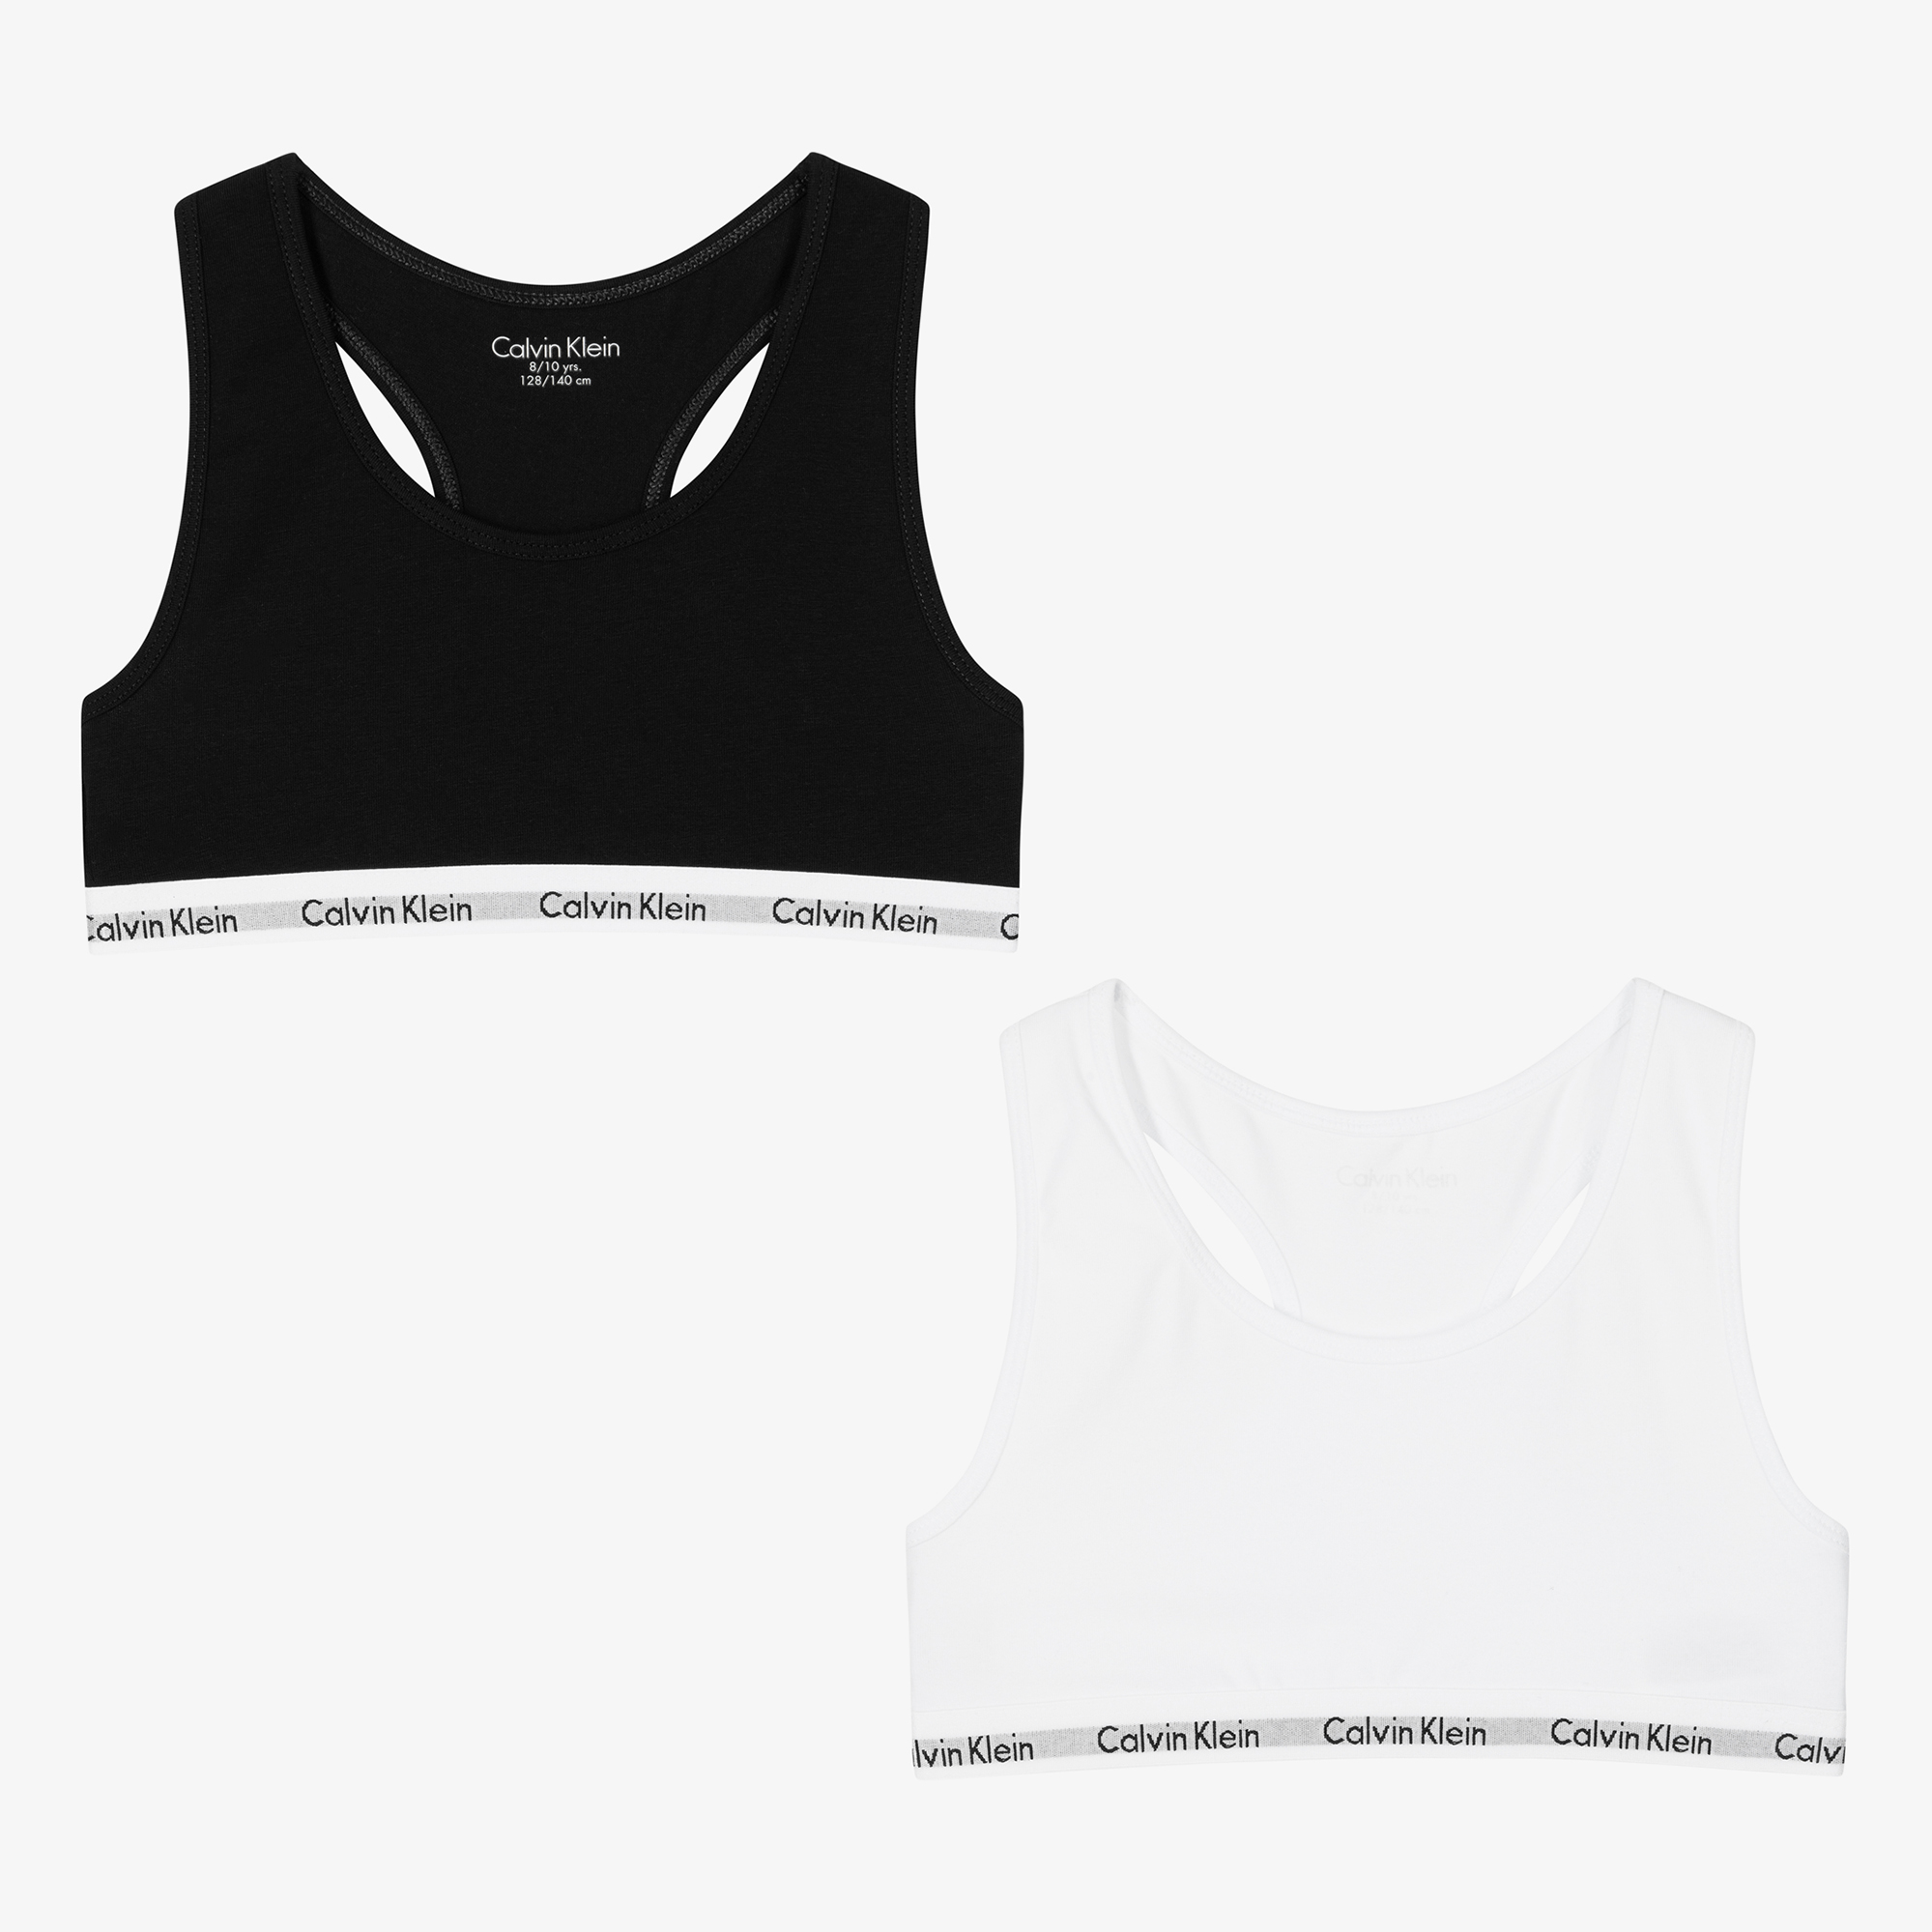 Calvin Klein - Girls Black & White Cotton Bralettes (2 Pack